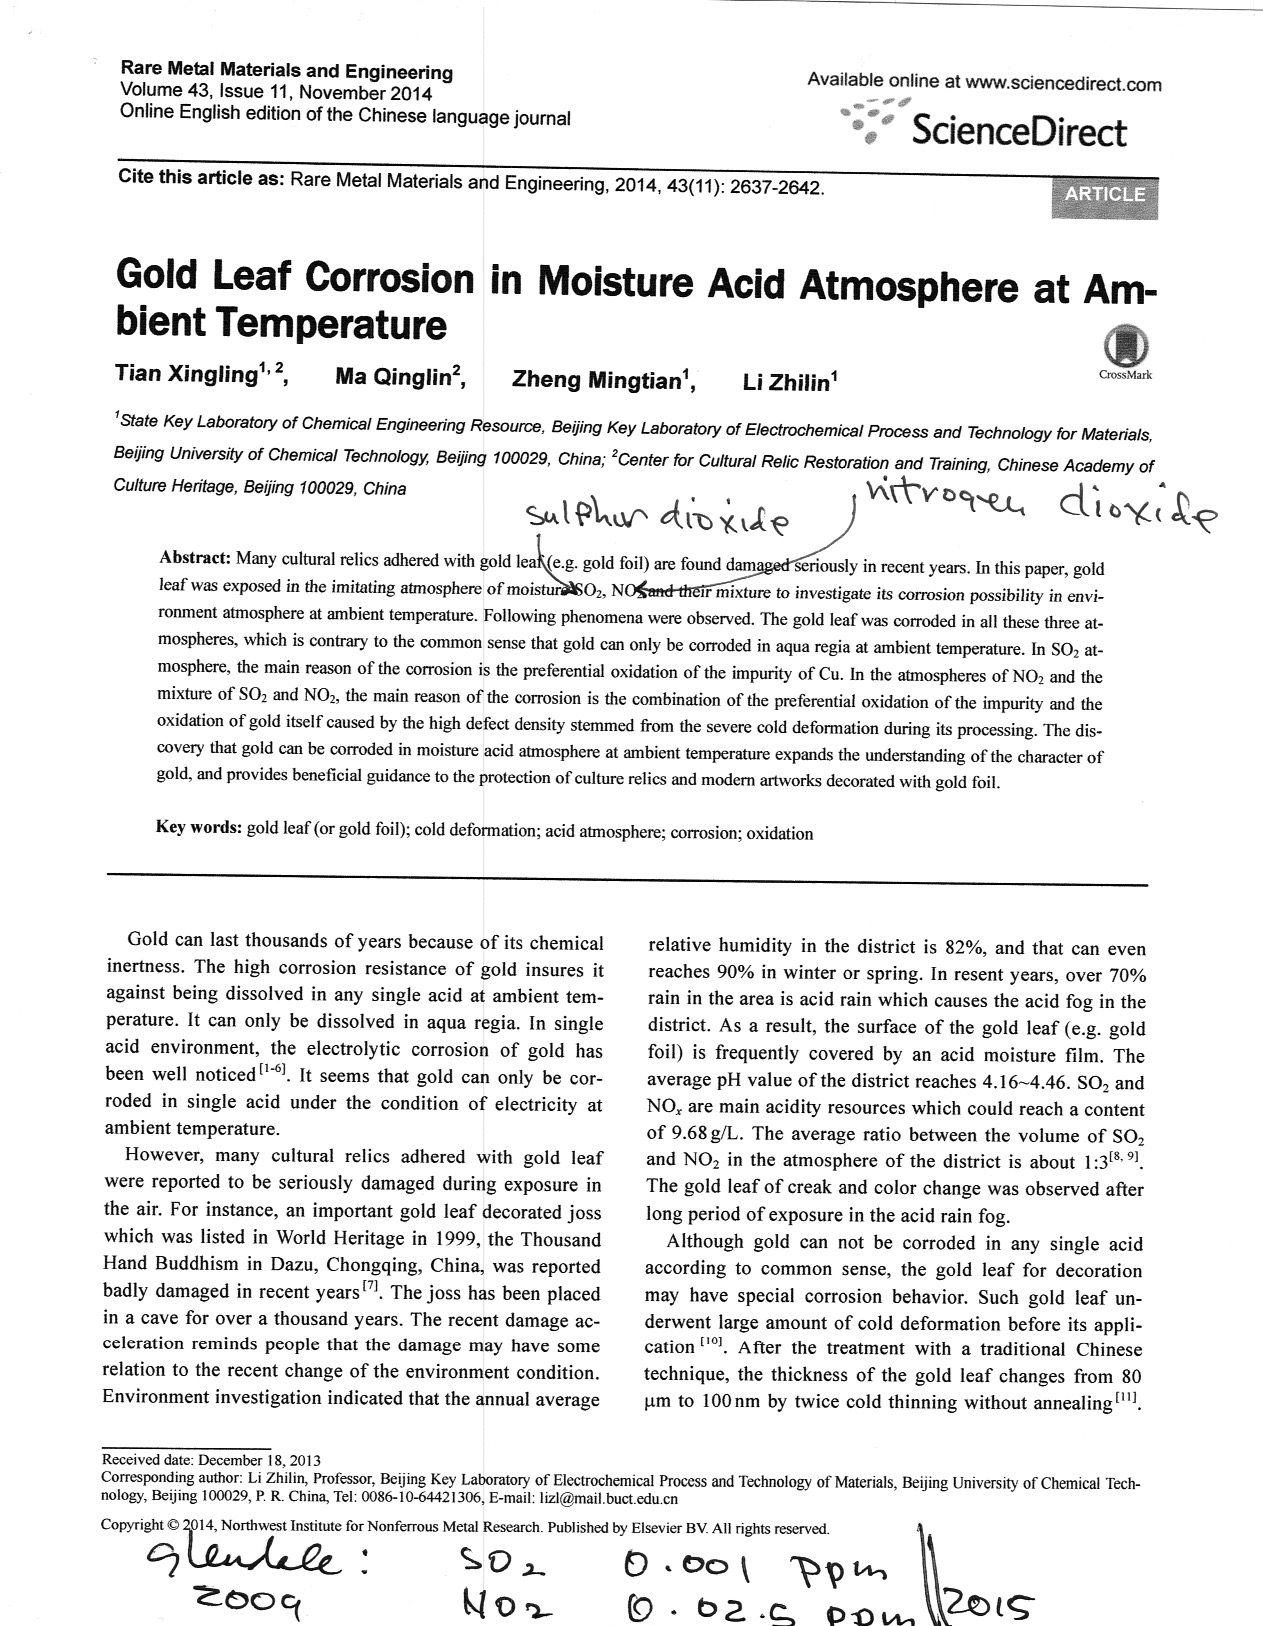 Gold Leaf corrosion article 0 copy.jpg